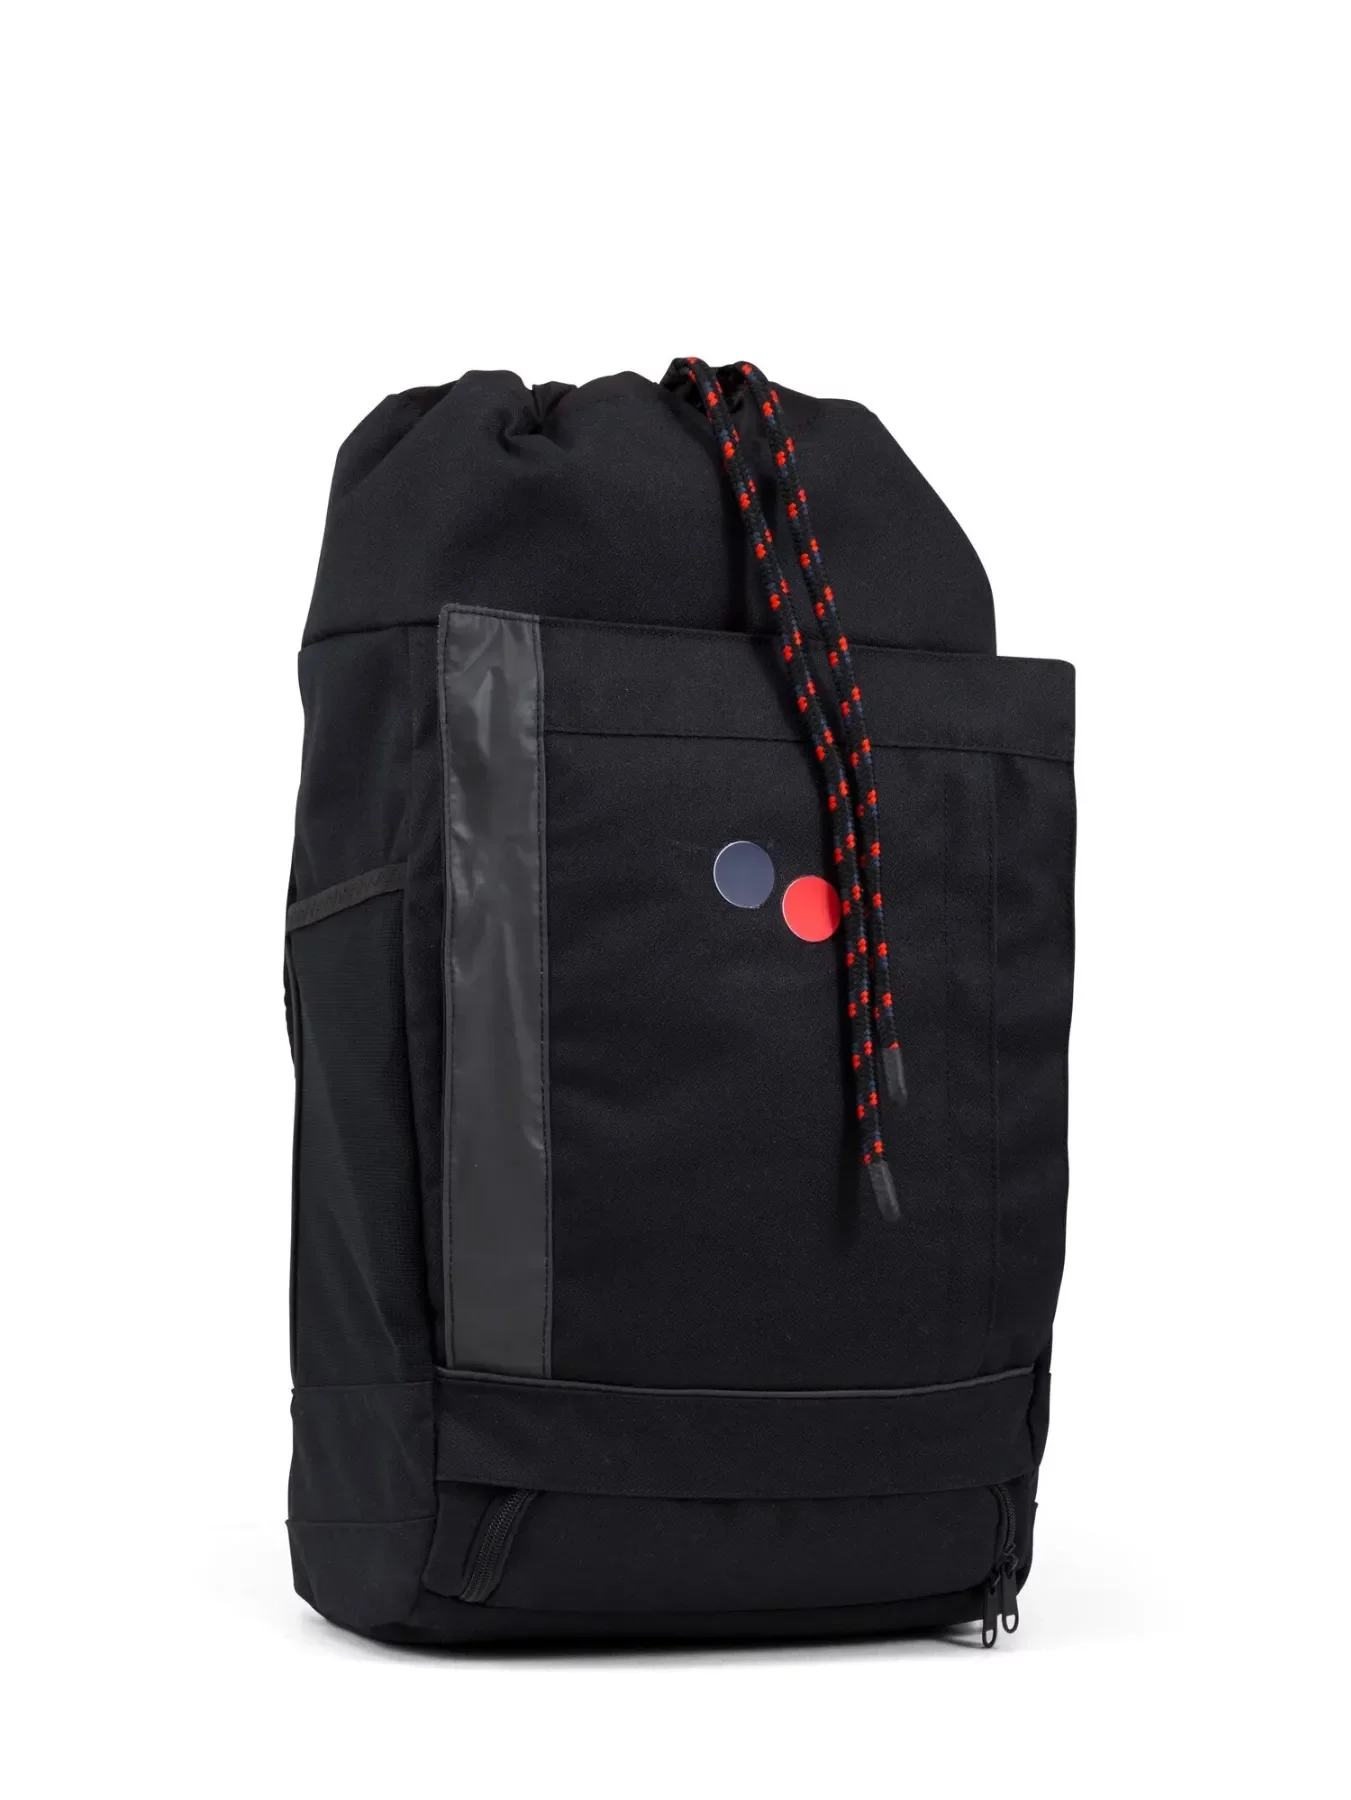 pinqponq Backpack BLOK medium - Licorice Black